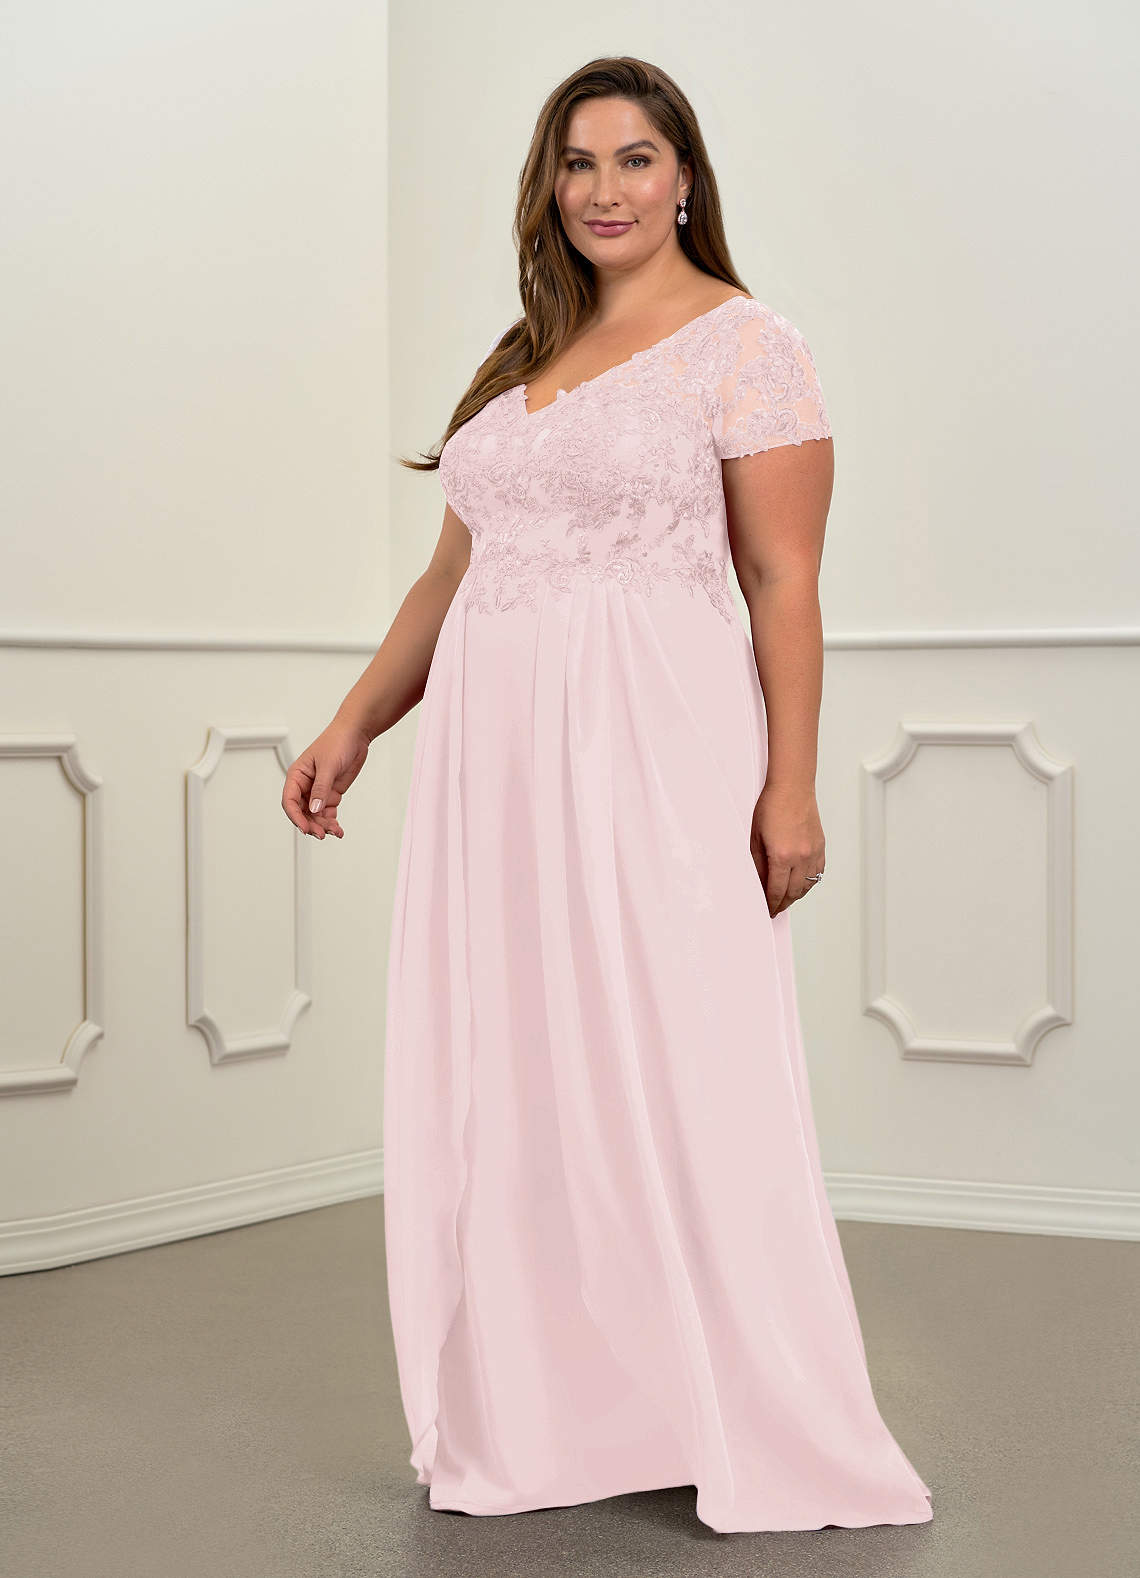 Azazie Dunja Mother of the Bride Dresses A-Line V-Neck Lace Chiffon Floor-Length Dress image1